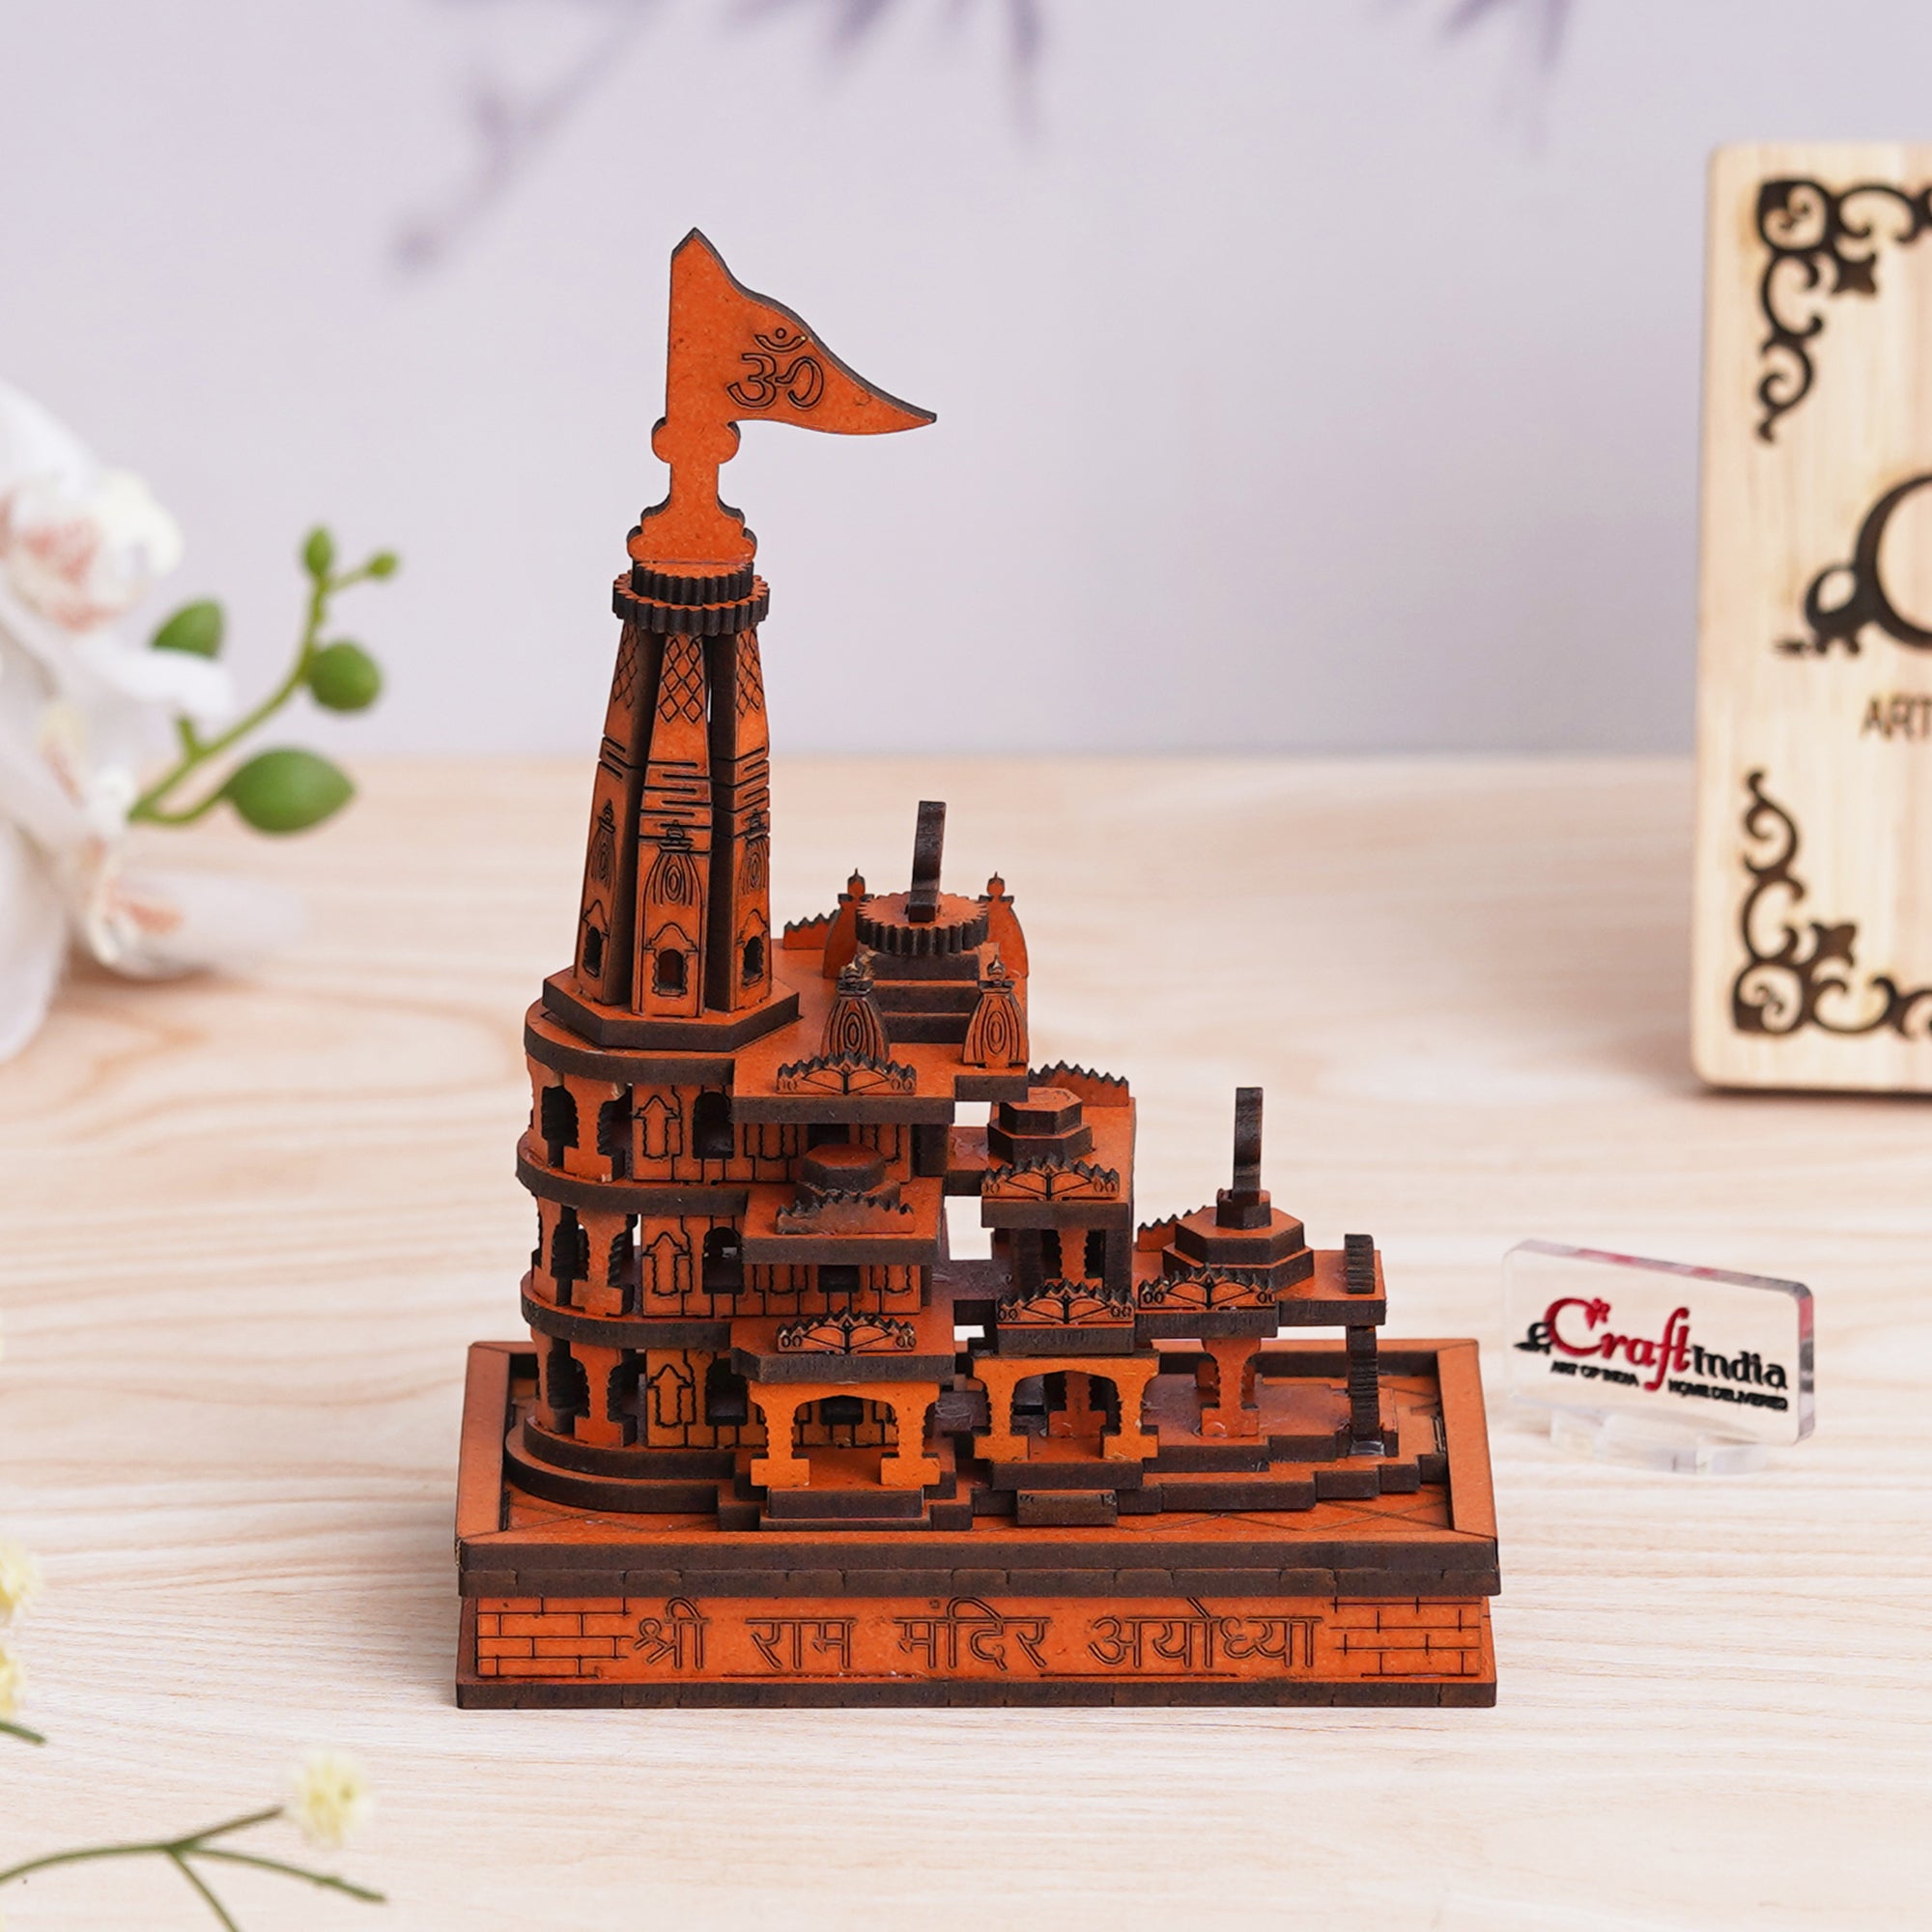 eCraftIndia Shri Ram Mandir Ayodhya Model - Wooden MDF Craftsmanship Authentic Designer Temple - Ideal for Home Temple, Decor, and Spiritual Gifting (Orange, Brown)